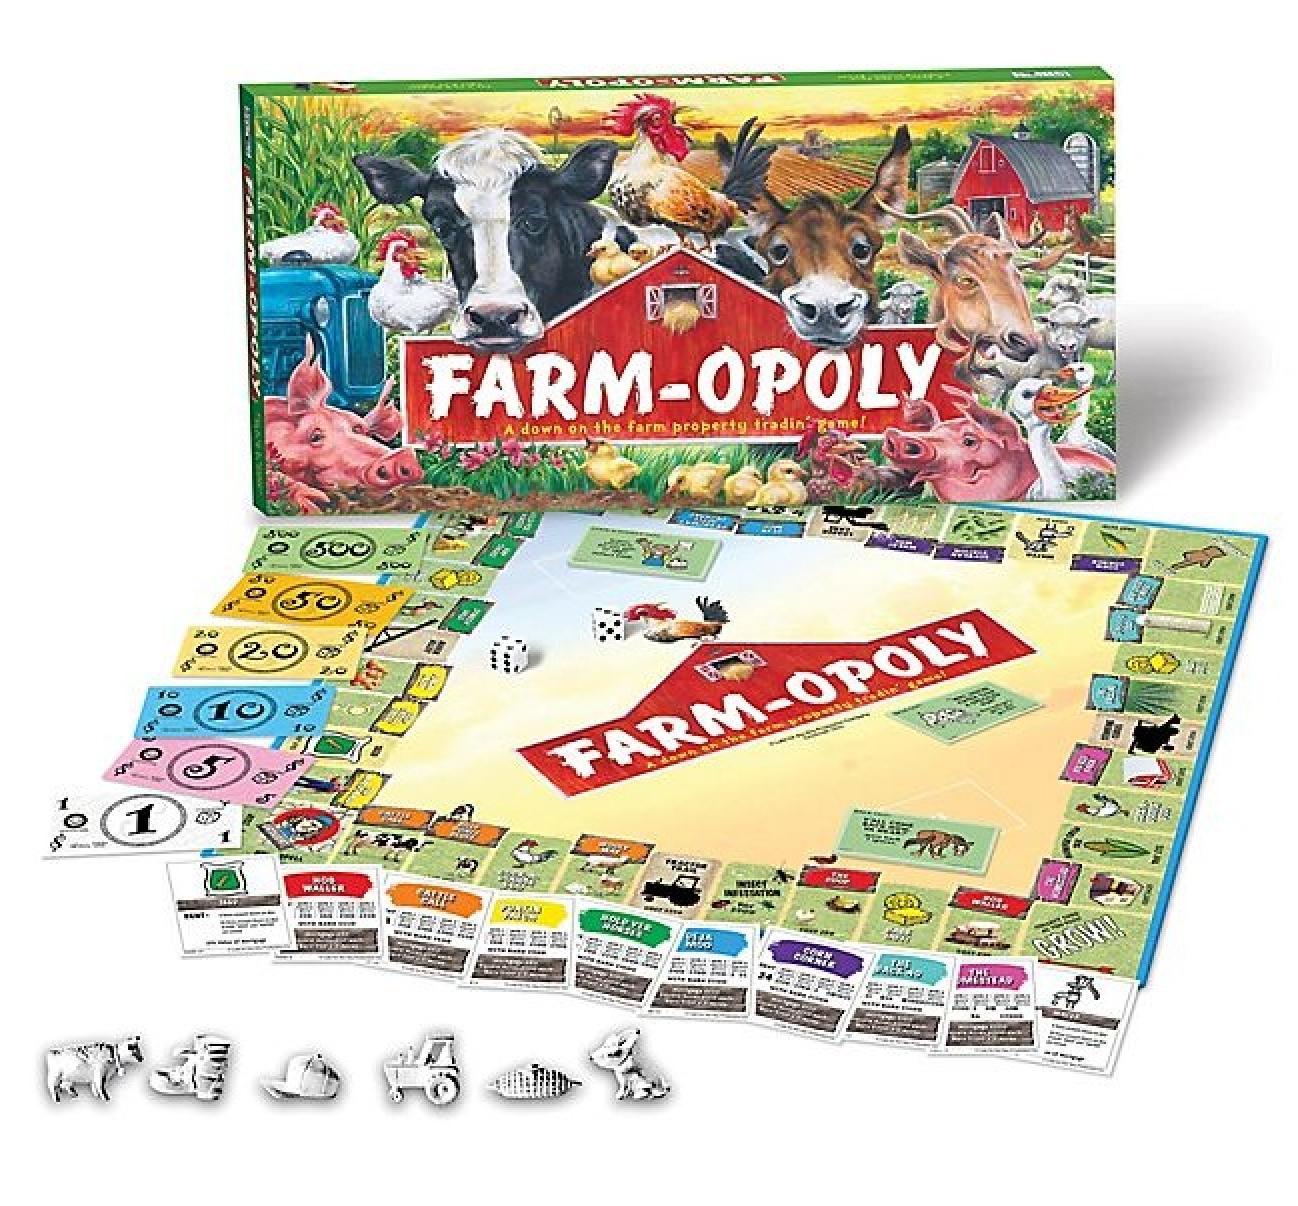 Farm-opoly Board Game Pieces